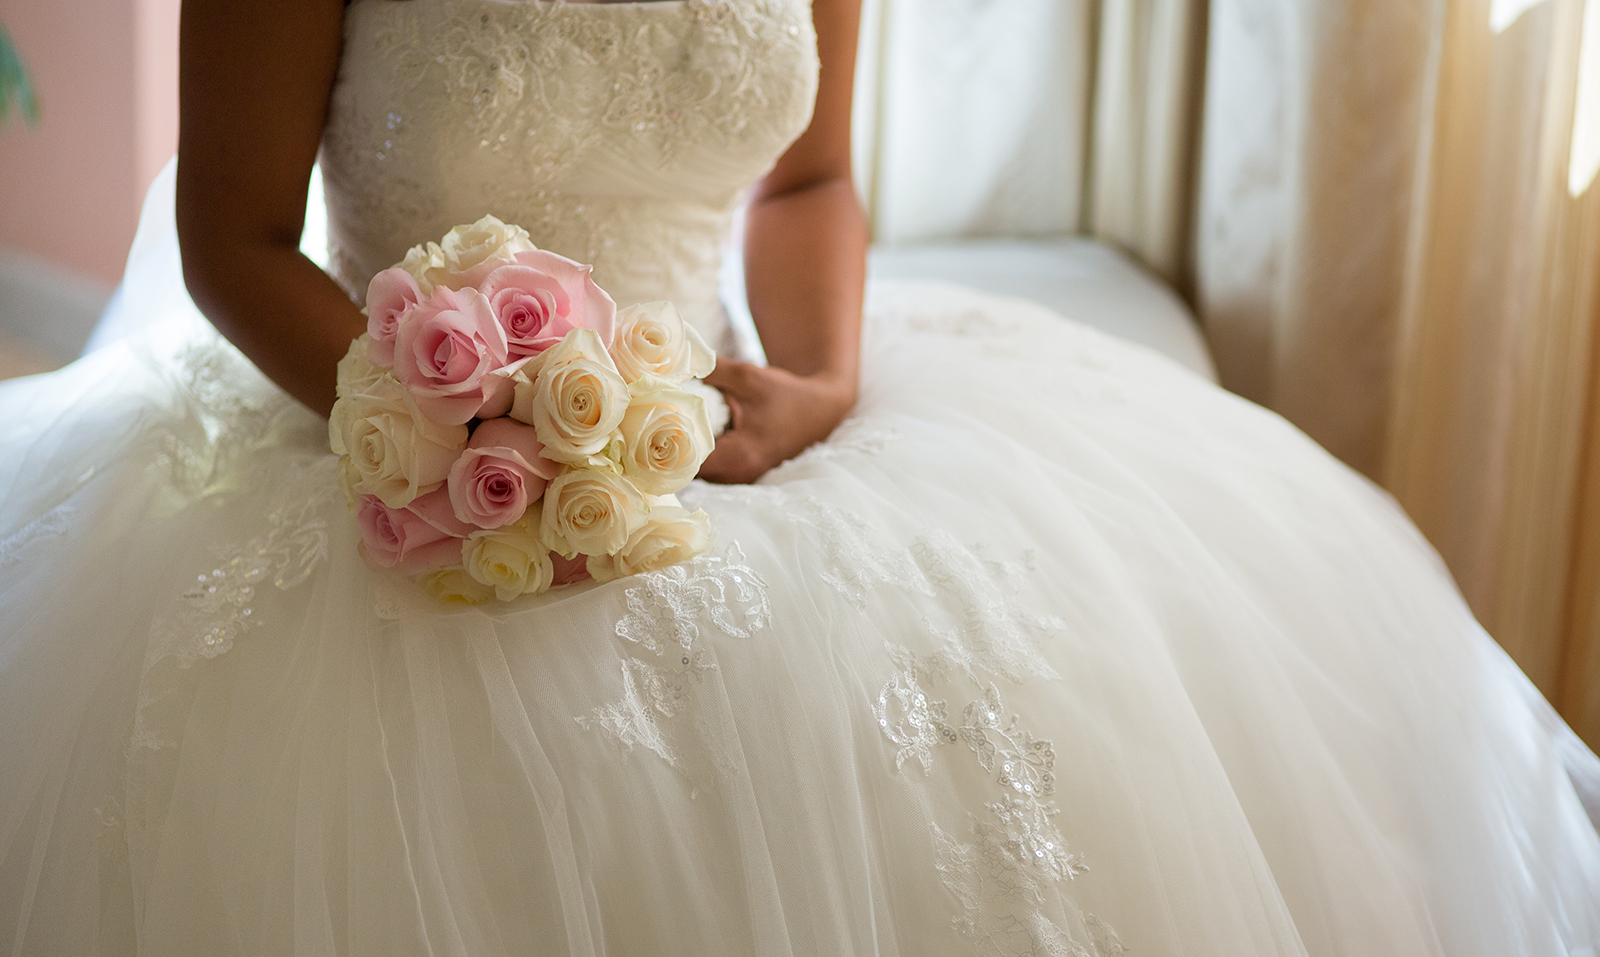 <div class='slider_caption'>		 <h1>Our Bridal Services</h1> 			<a class='slider-readmore' href='http://perryprocess.com/wedding-gowns/'>Read More</a>
			  </div>